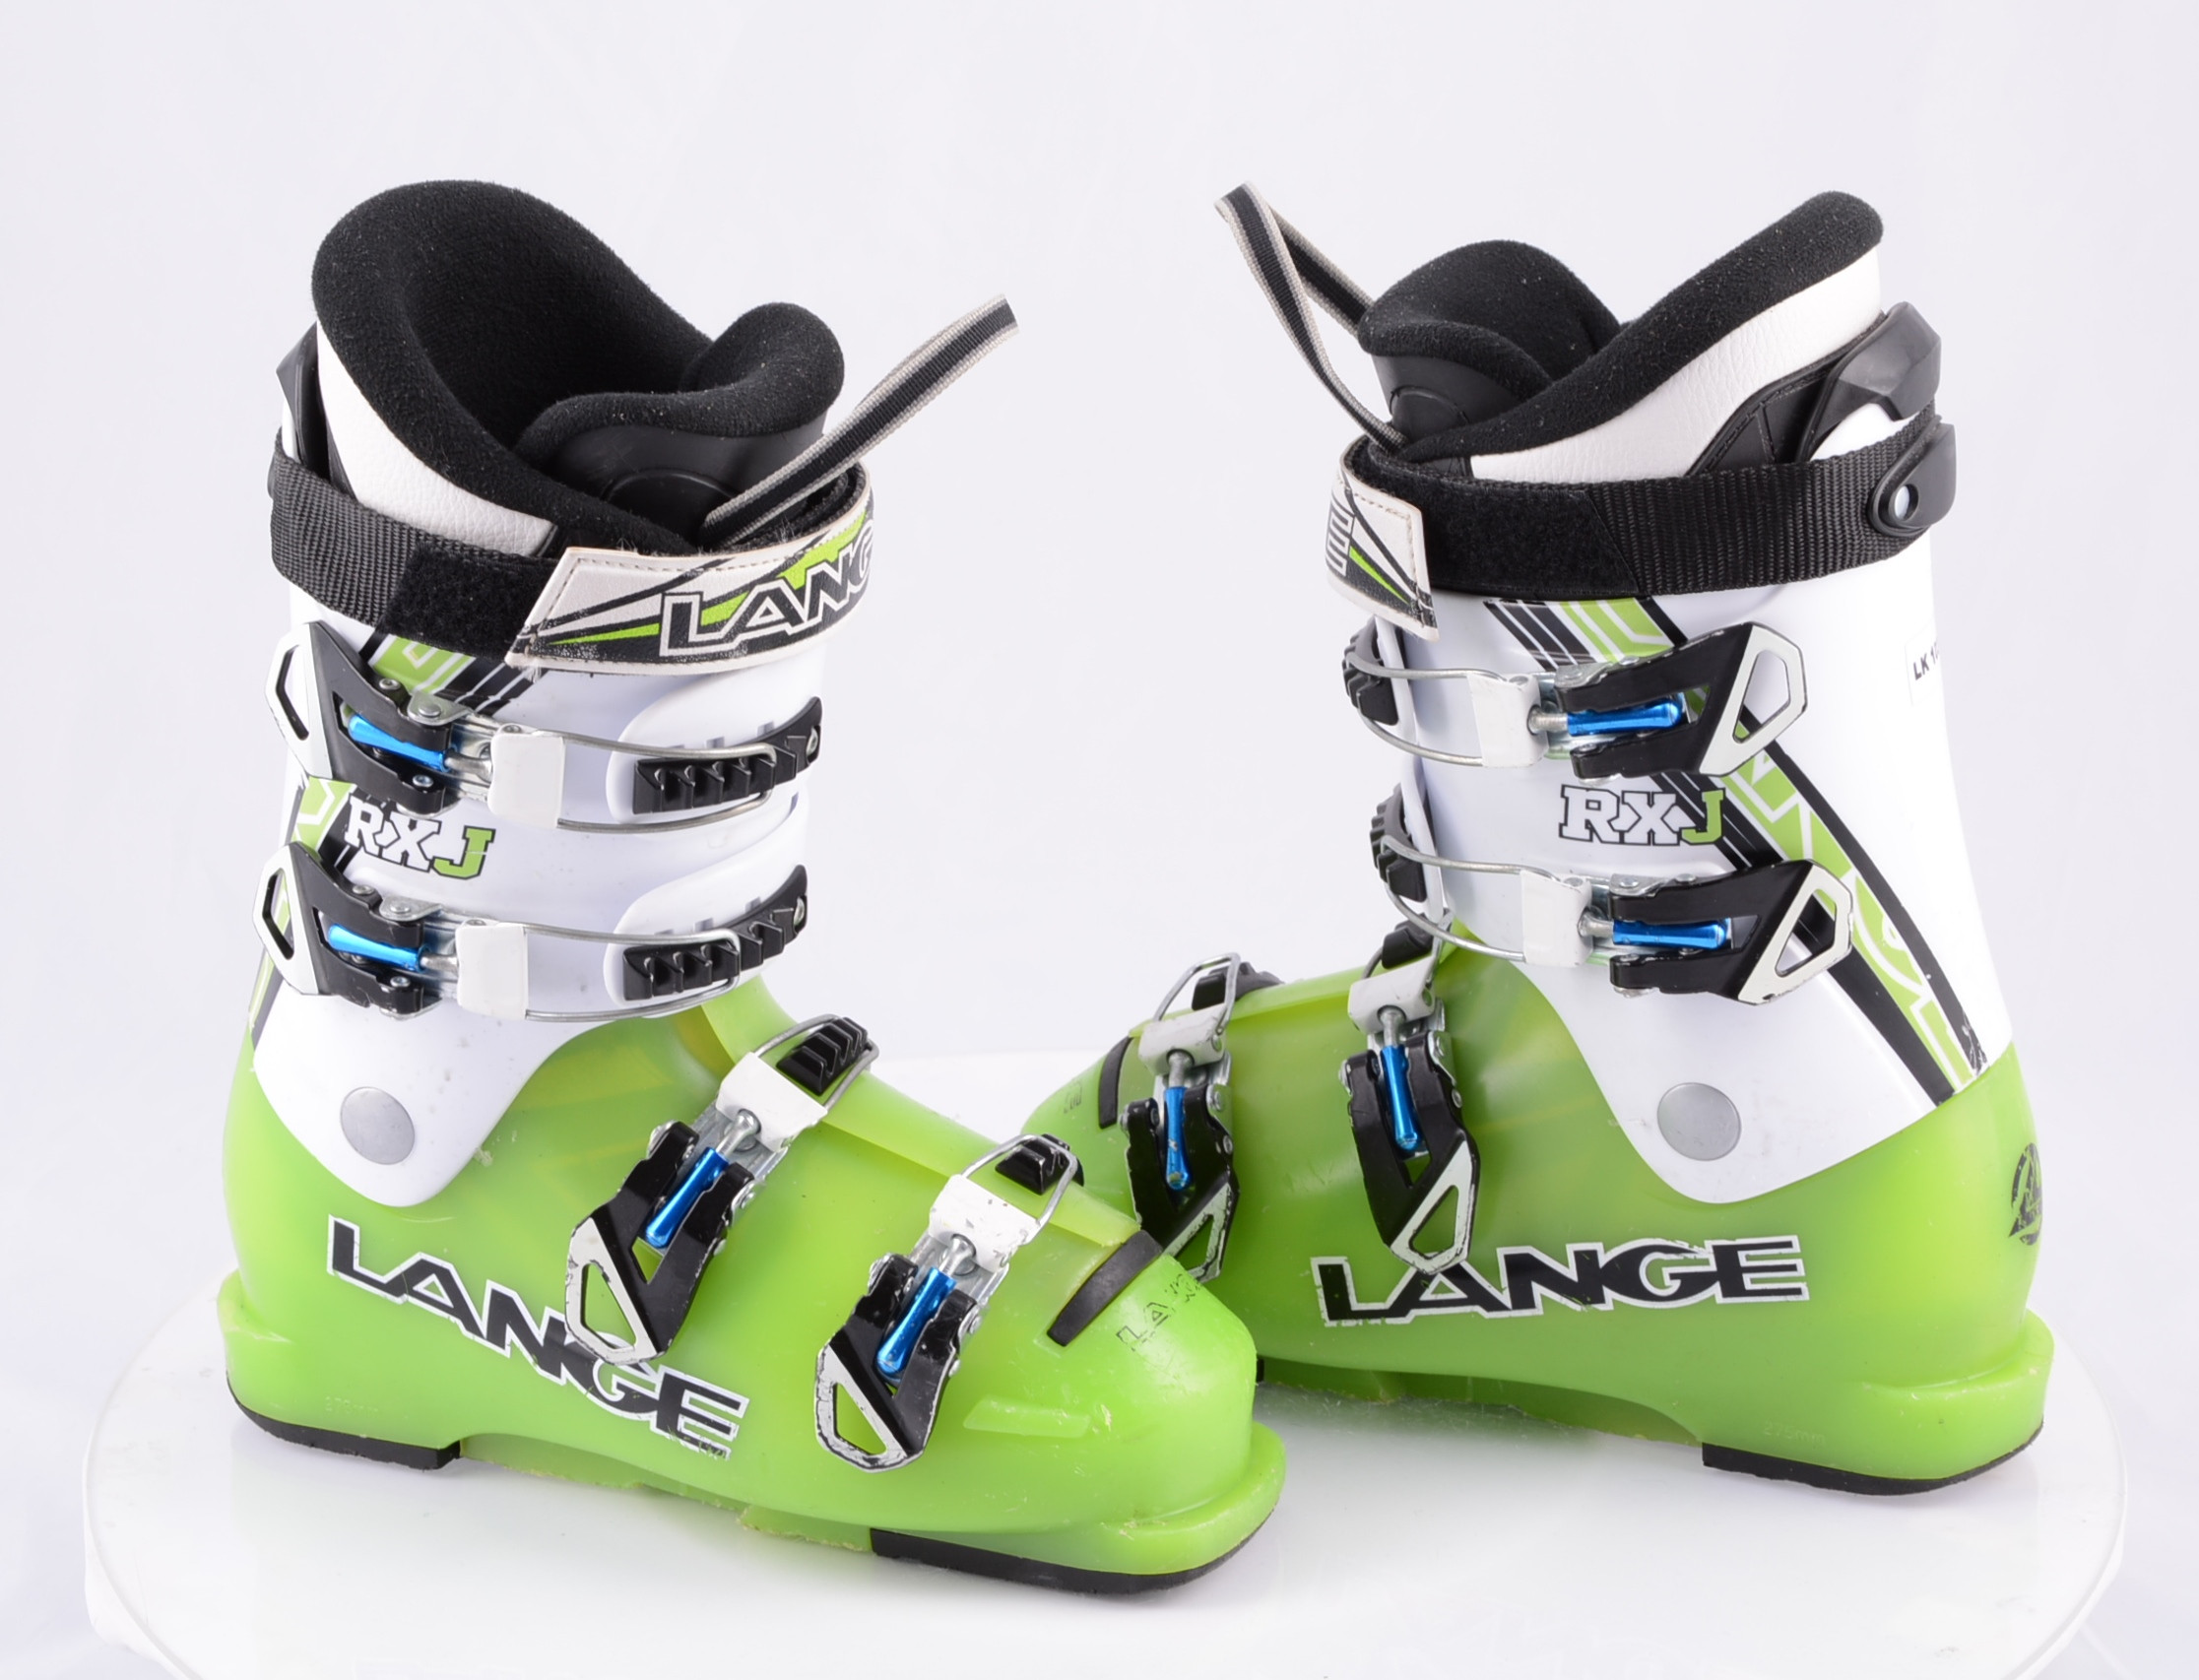 Versandhandel mit großer Produktauswahl Kinder/Junior Skischuhe LANGE RXJ macro micro, green/white